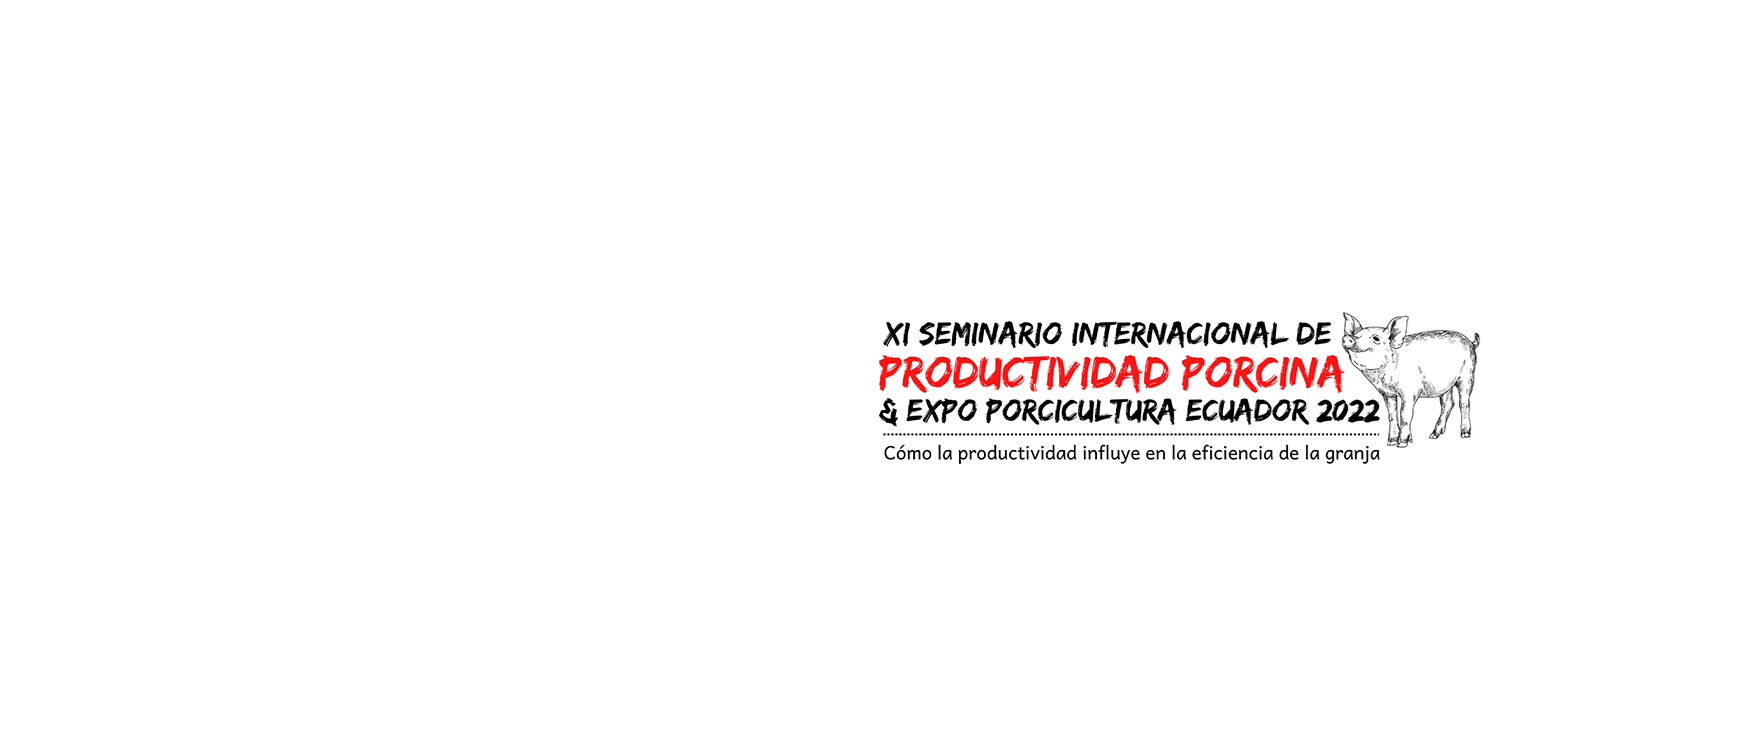 XI Seminario Internacional de Productividad Porcina & Expo Porcicultura Ecuador 2022